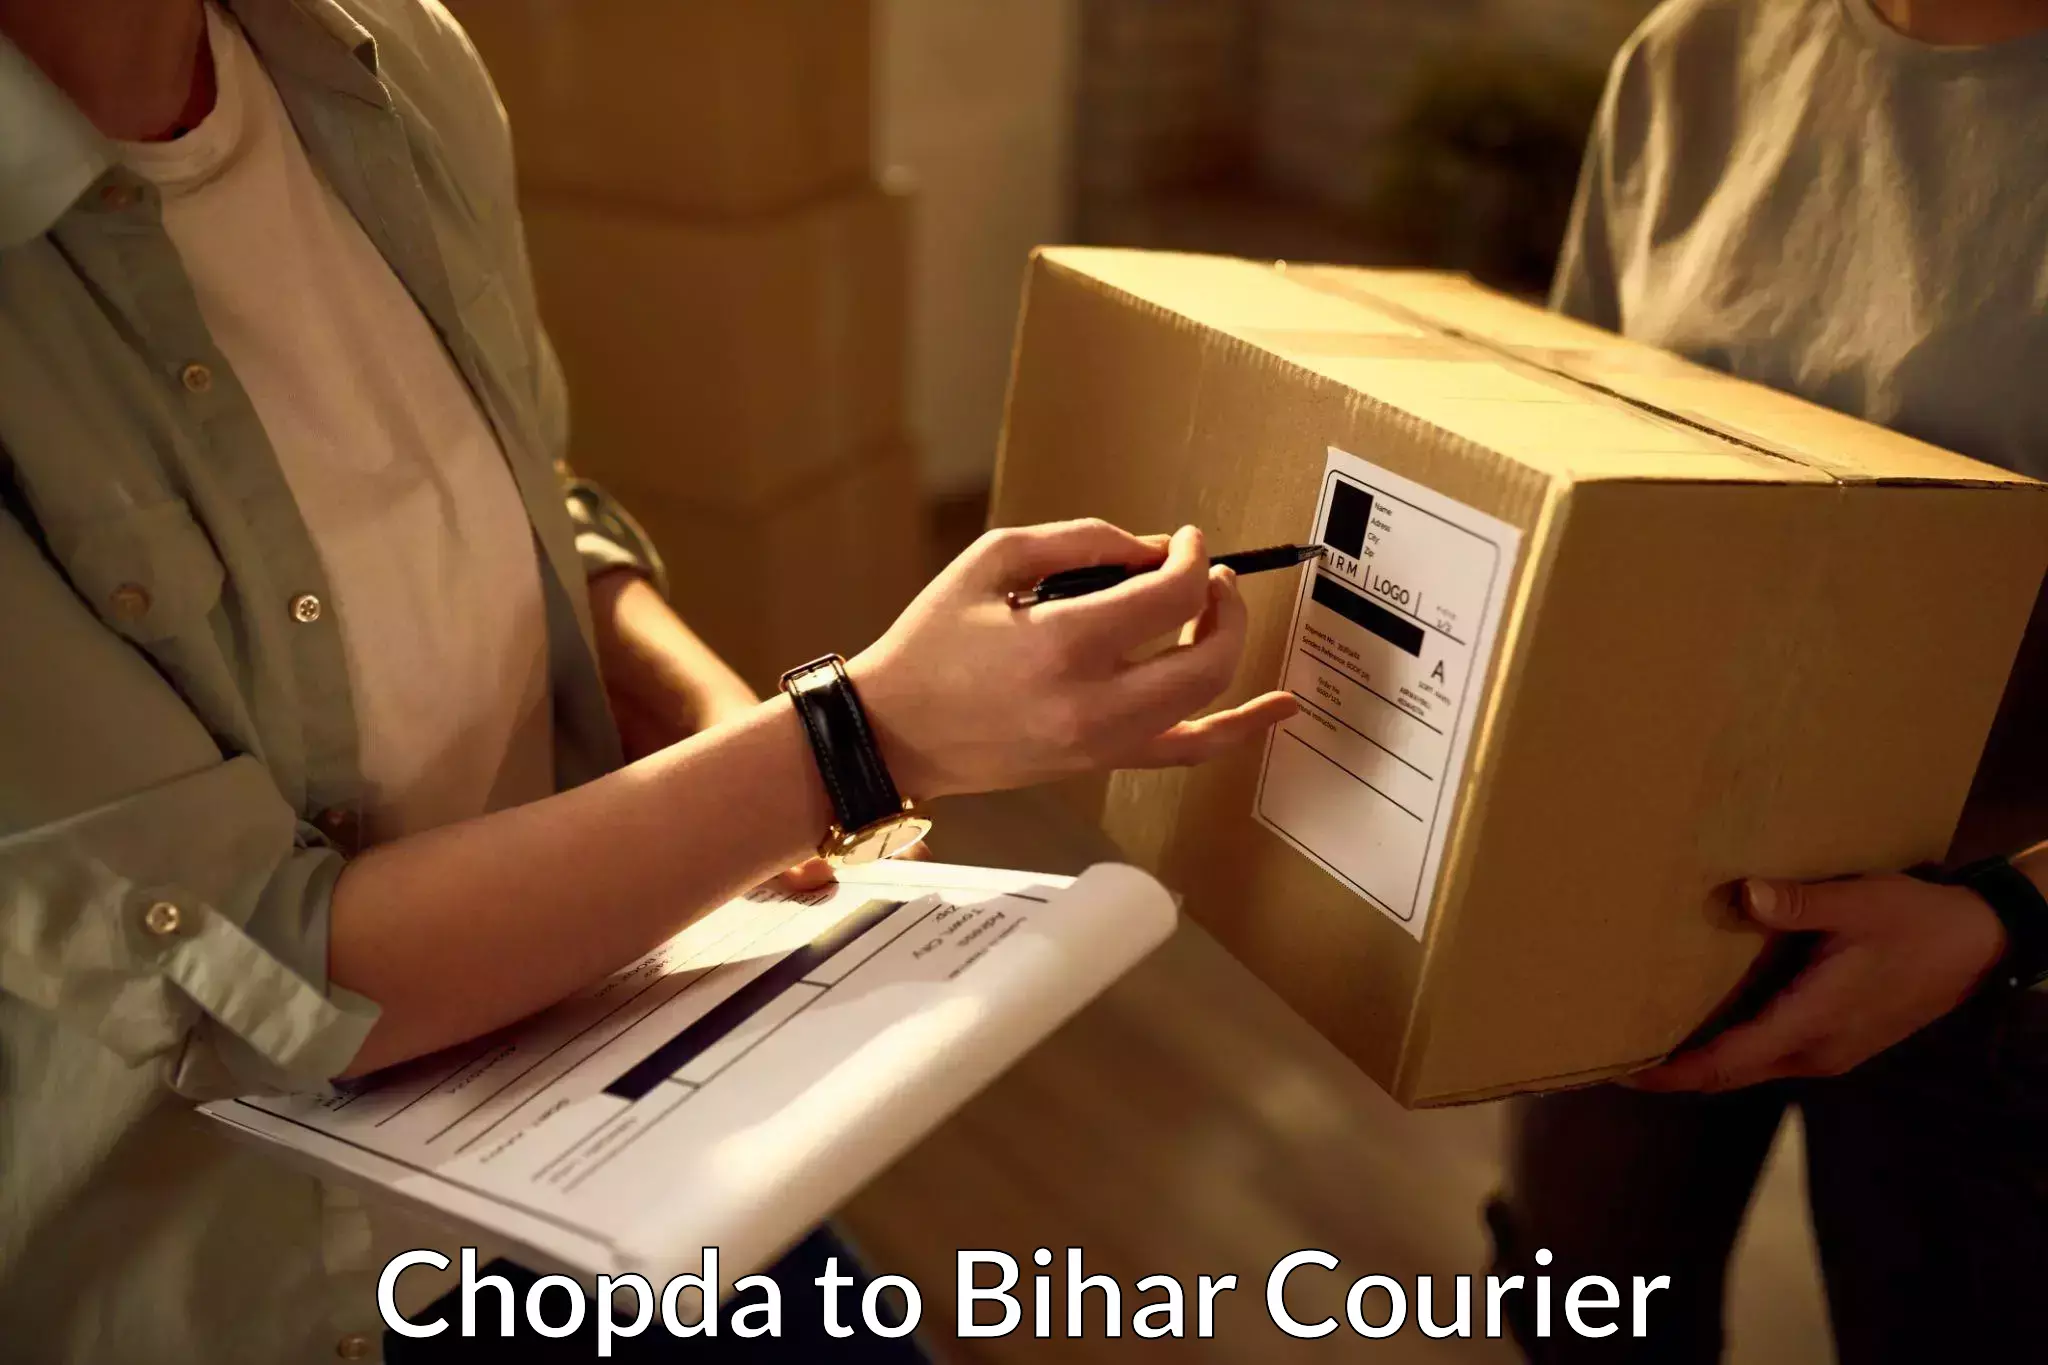 Courier membership Chopda to Sandesh